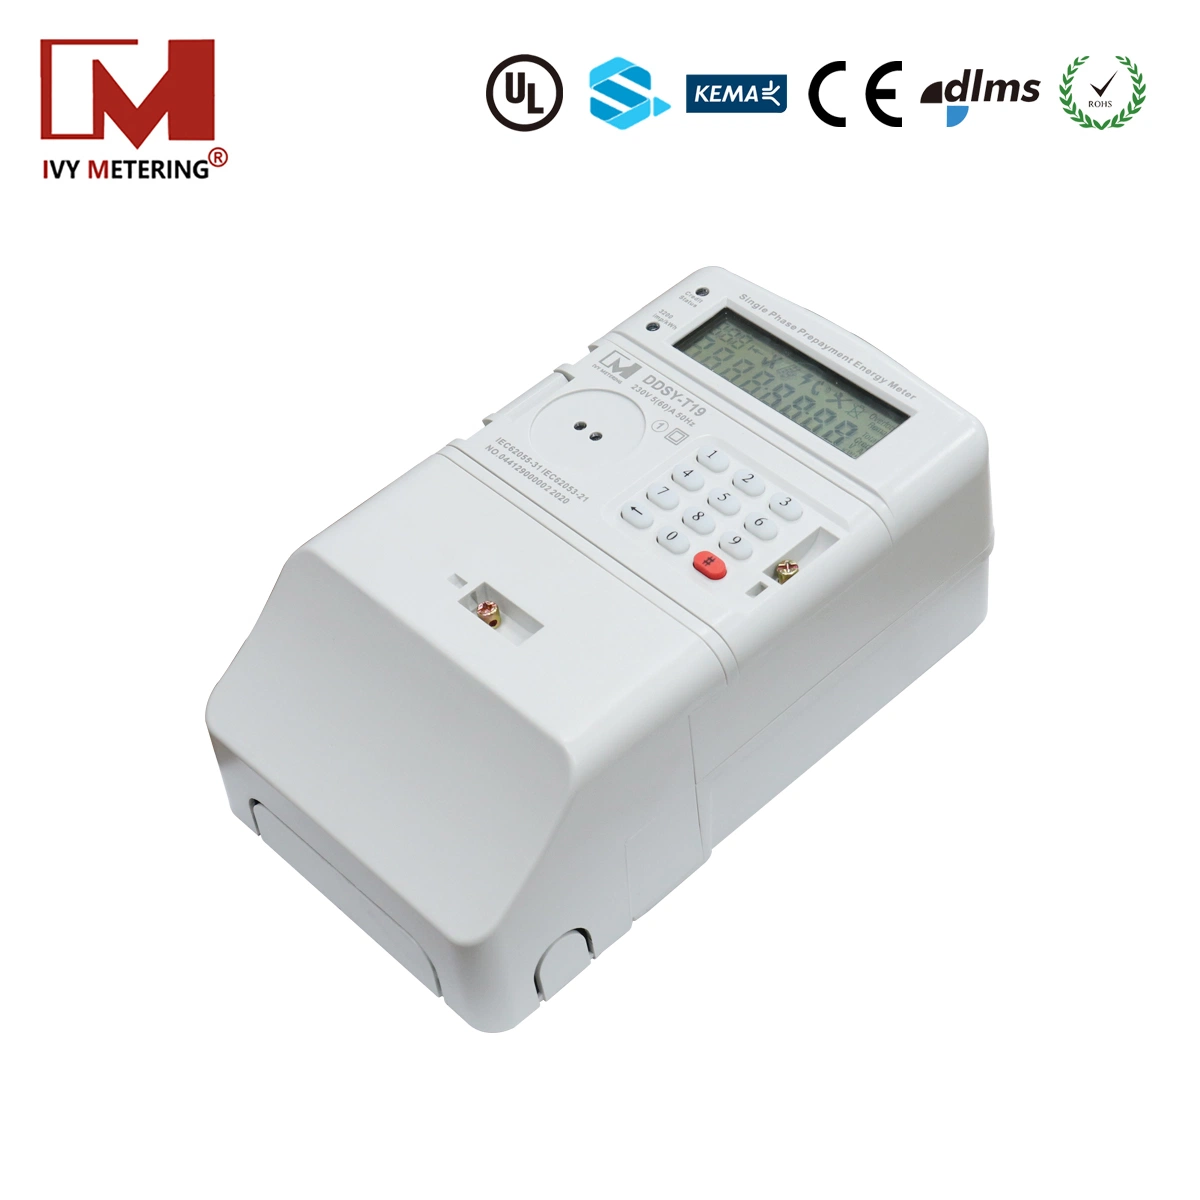 Kema Compliant Keypad Electrical Meter for Bangladesh Market